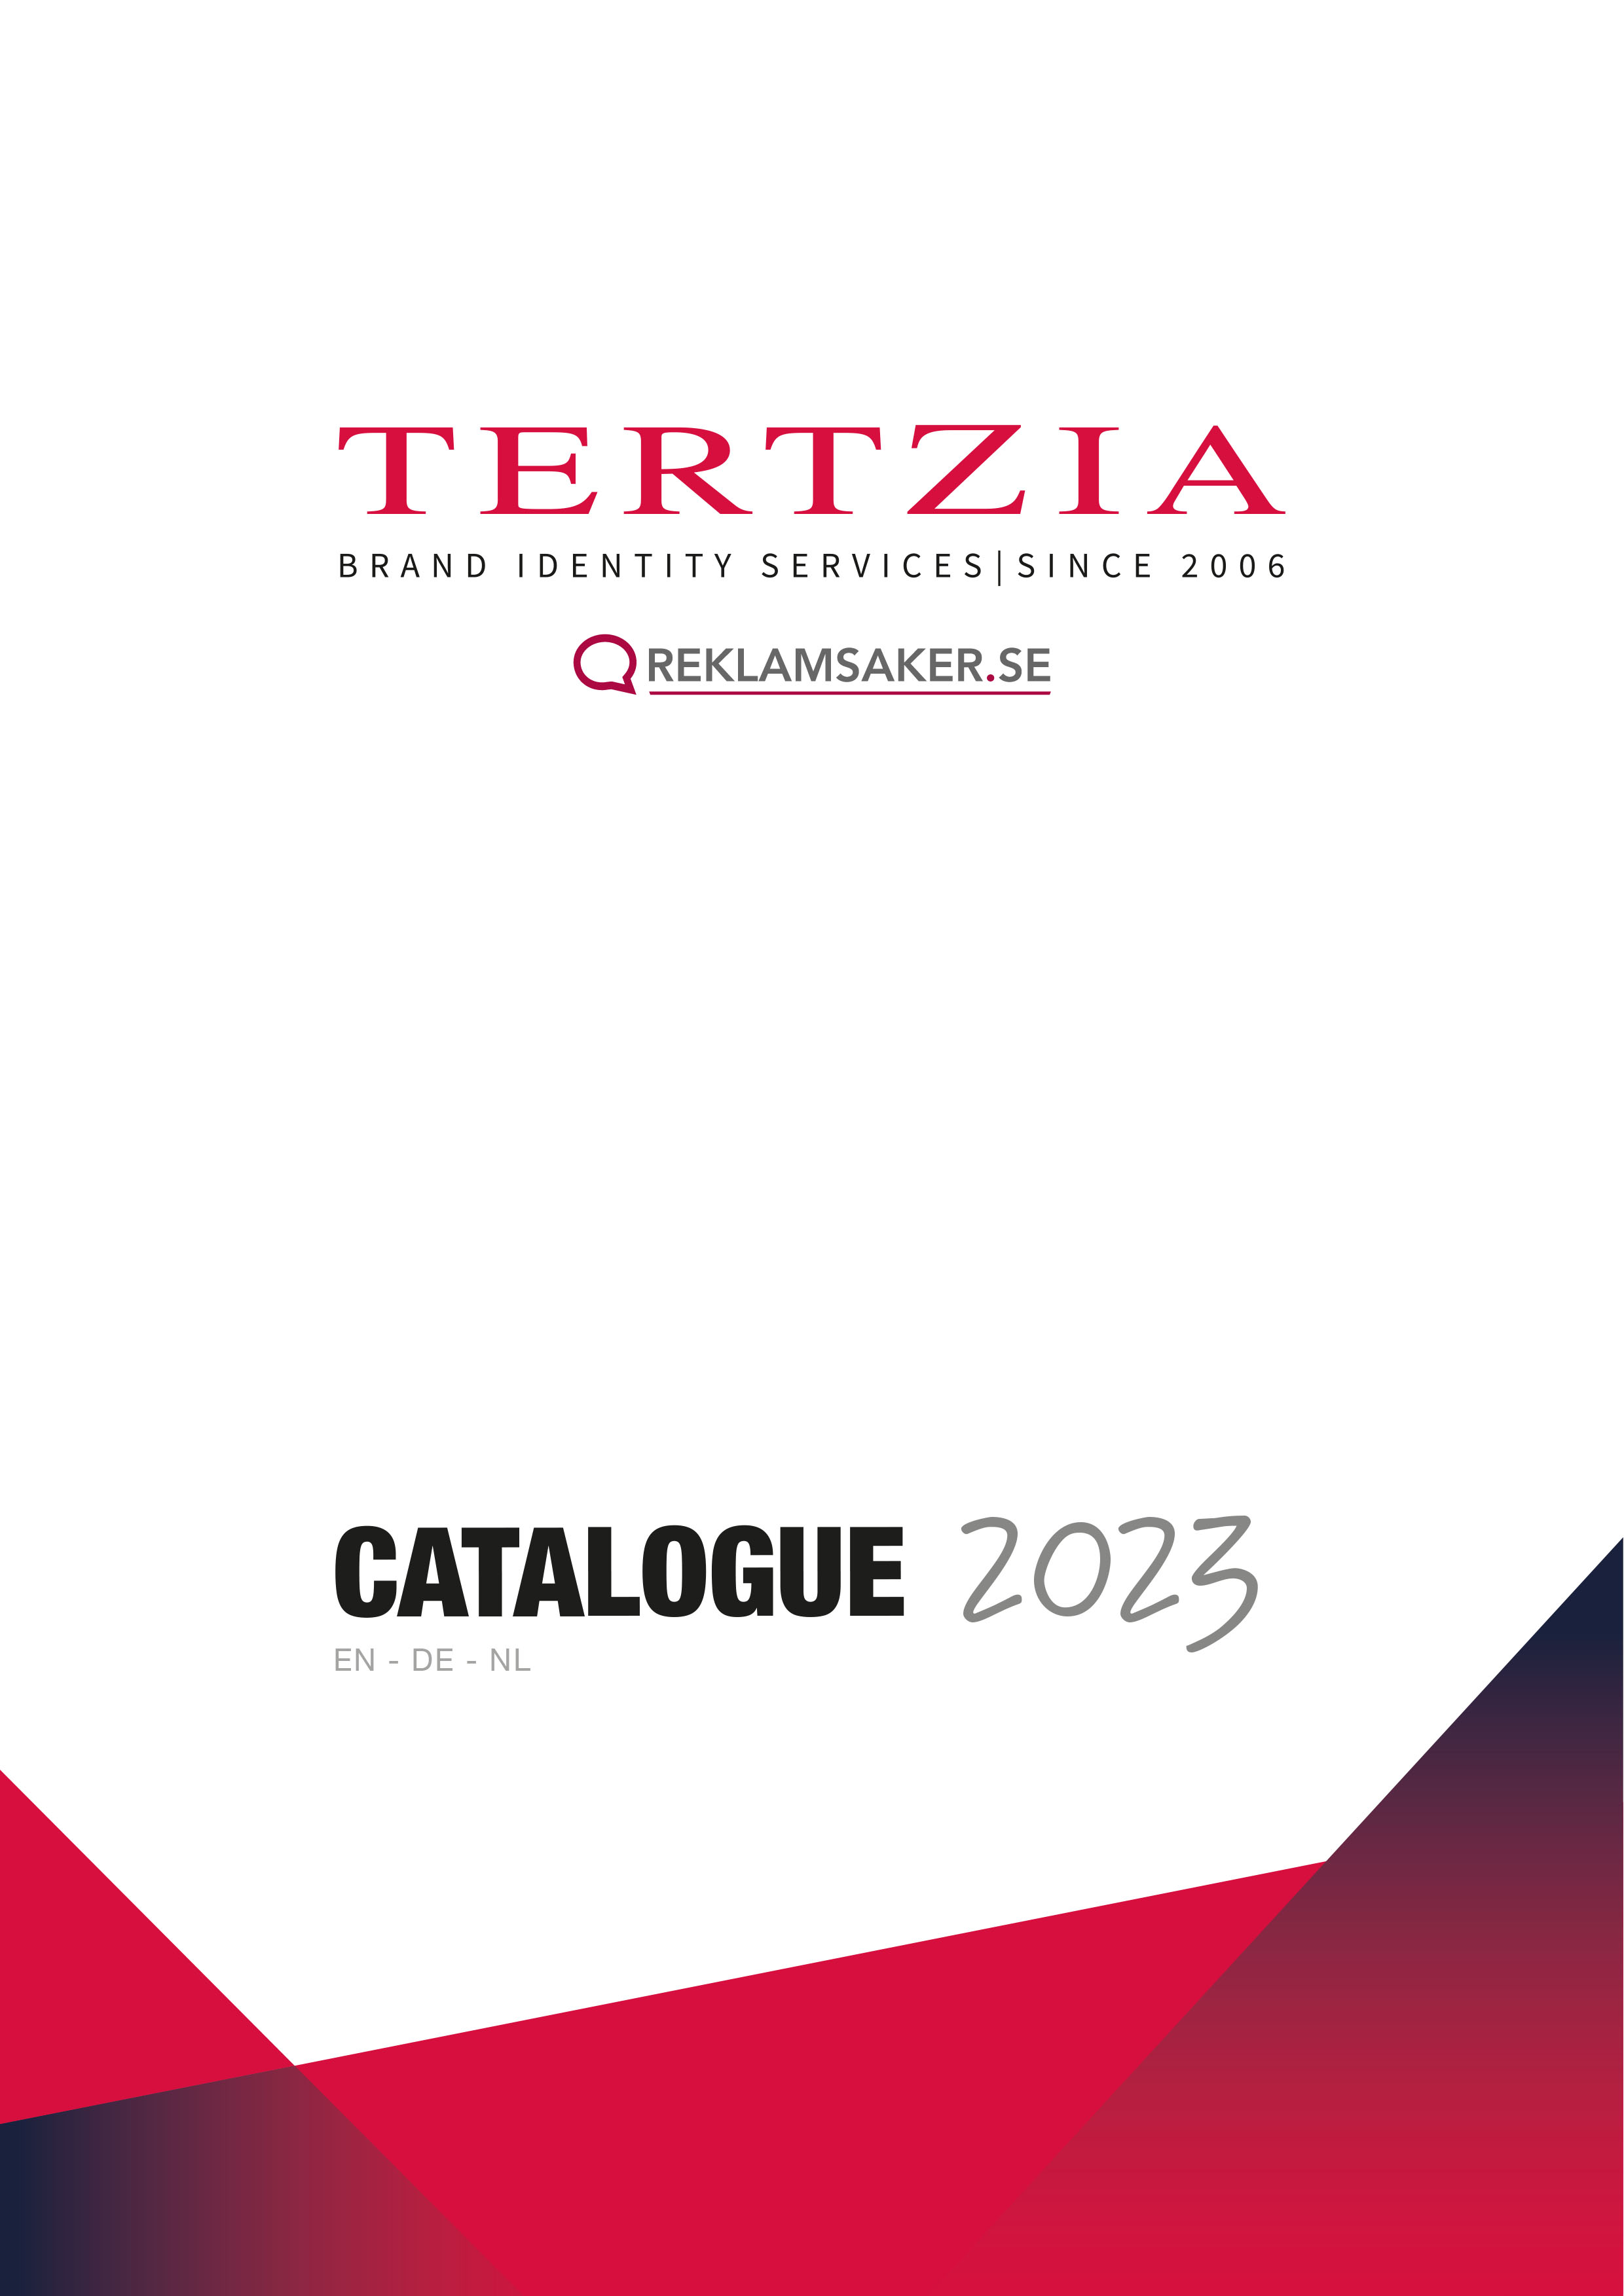 Catalogue 2023 - Tertzia